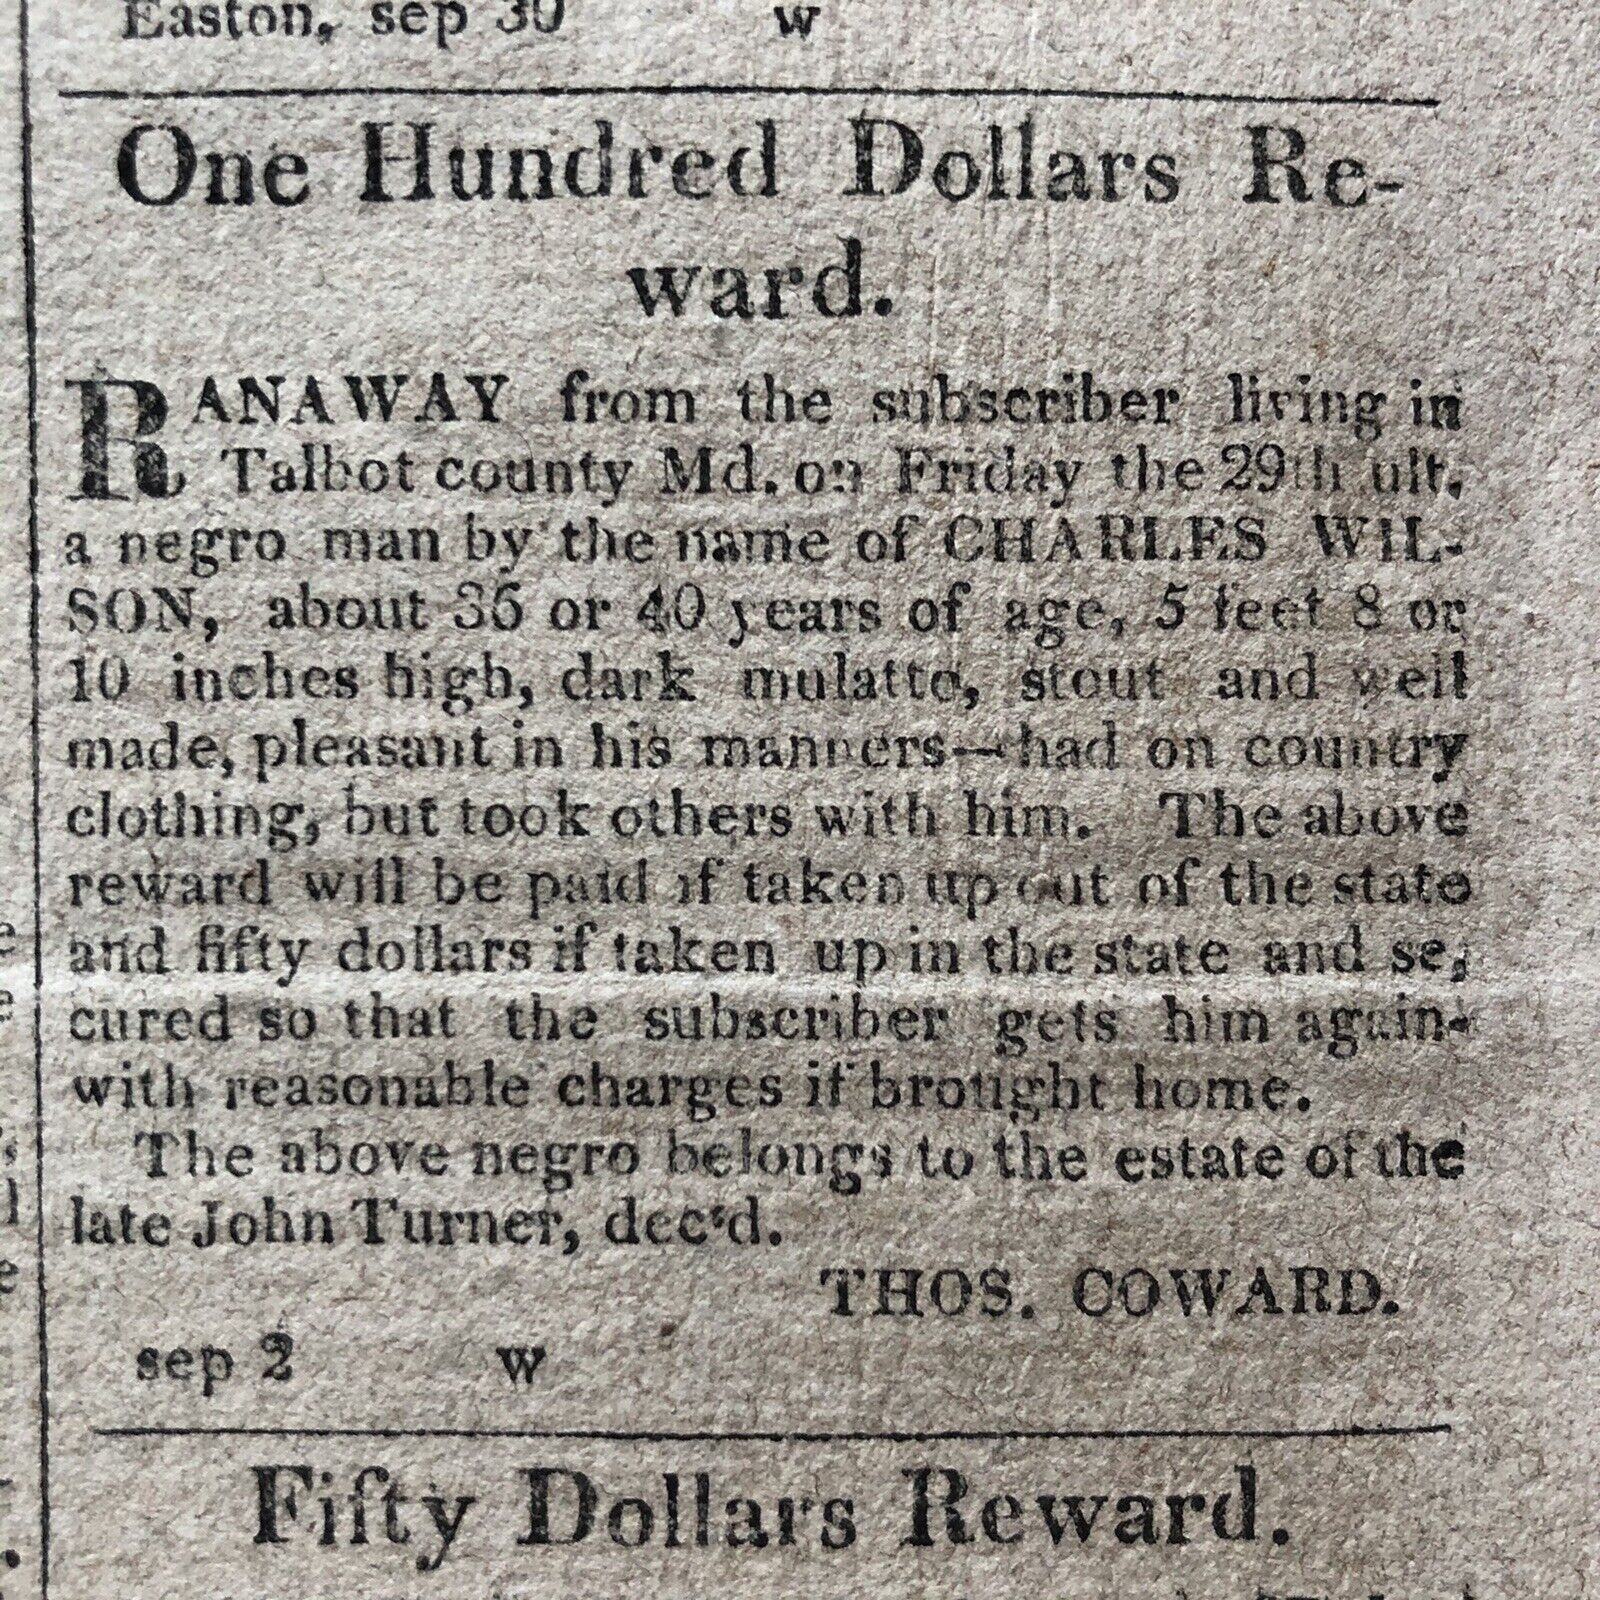 1823 EASTON MARYLAND newspaper MULTIPLE RUNAWAY SLAVE ADS Caroline TALBOT COUNTY